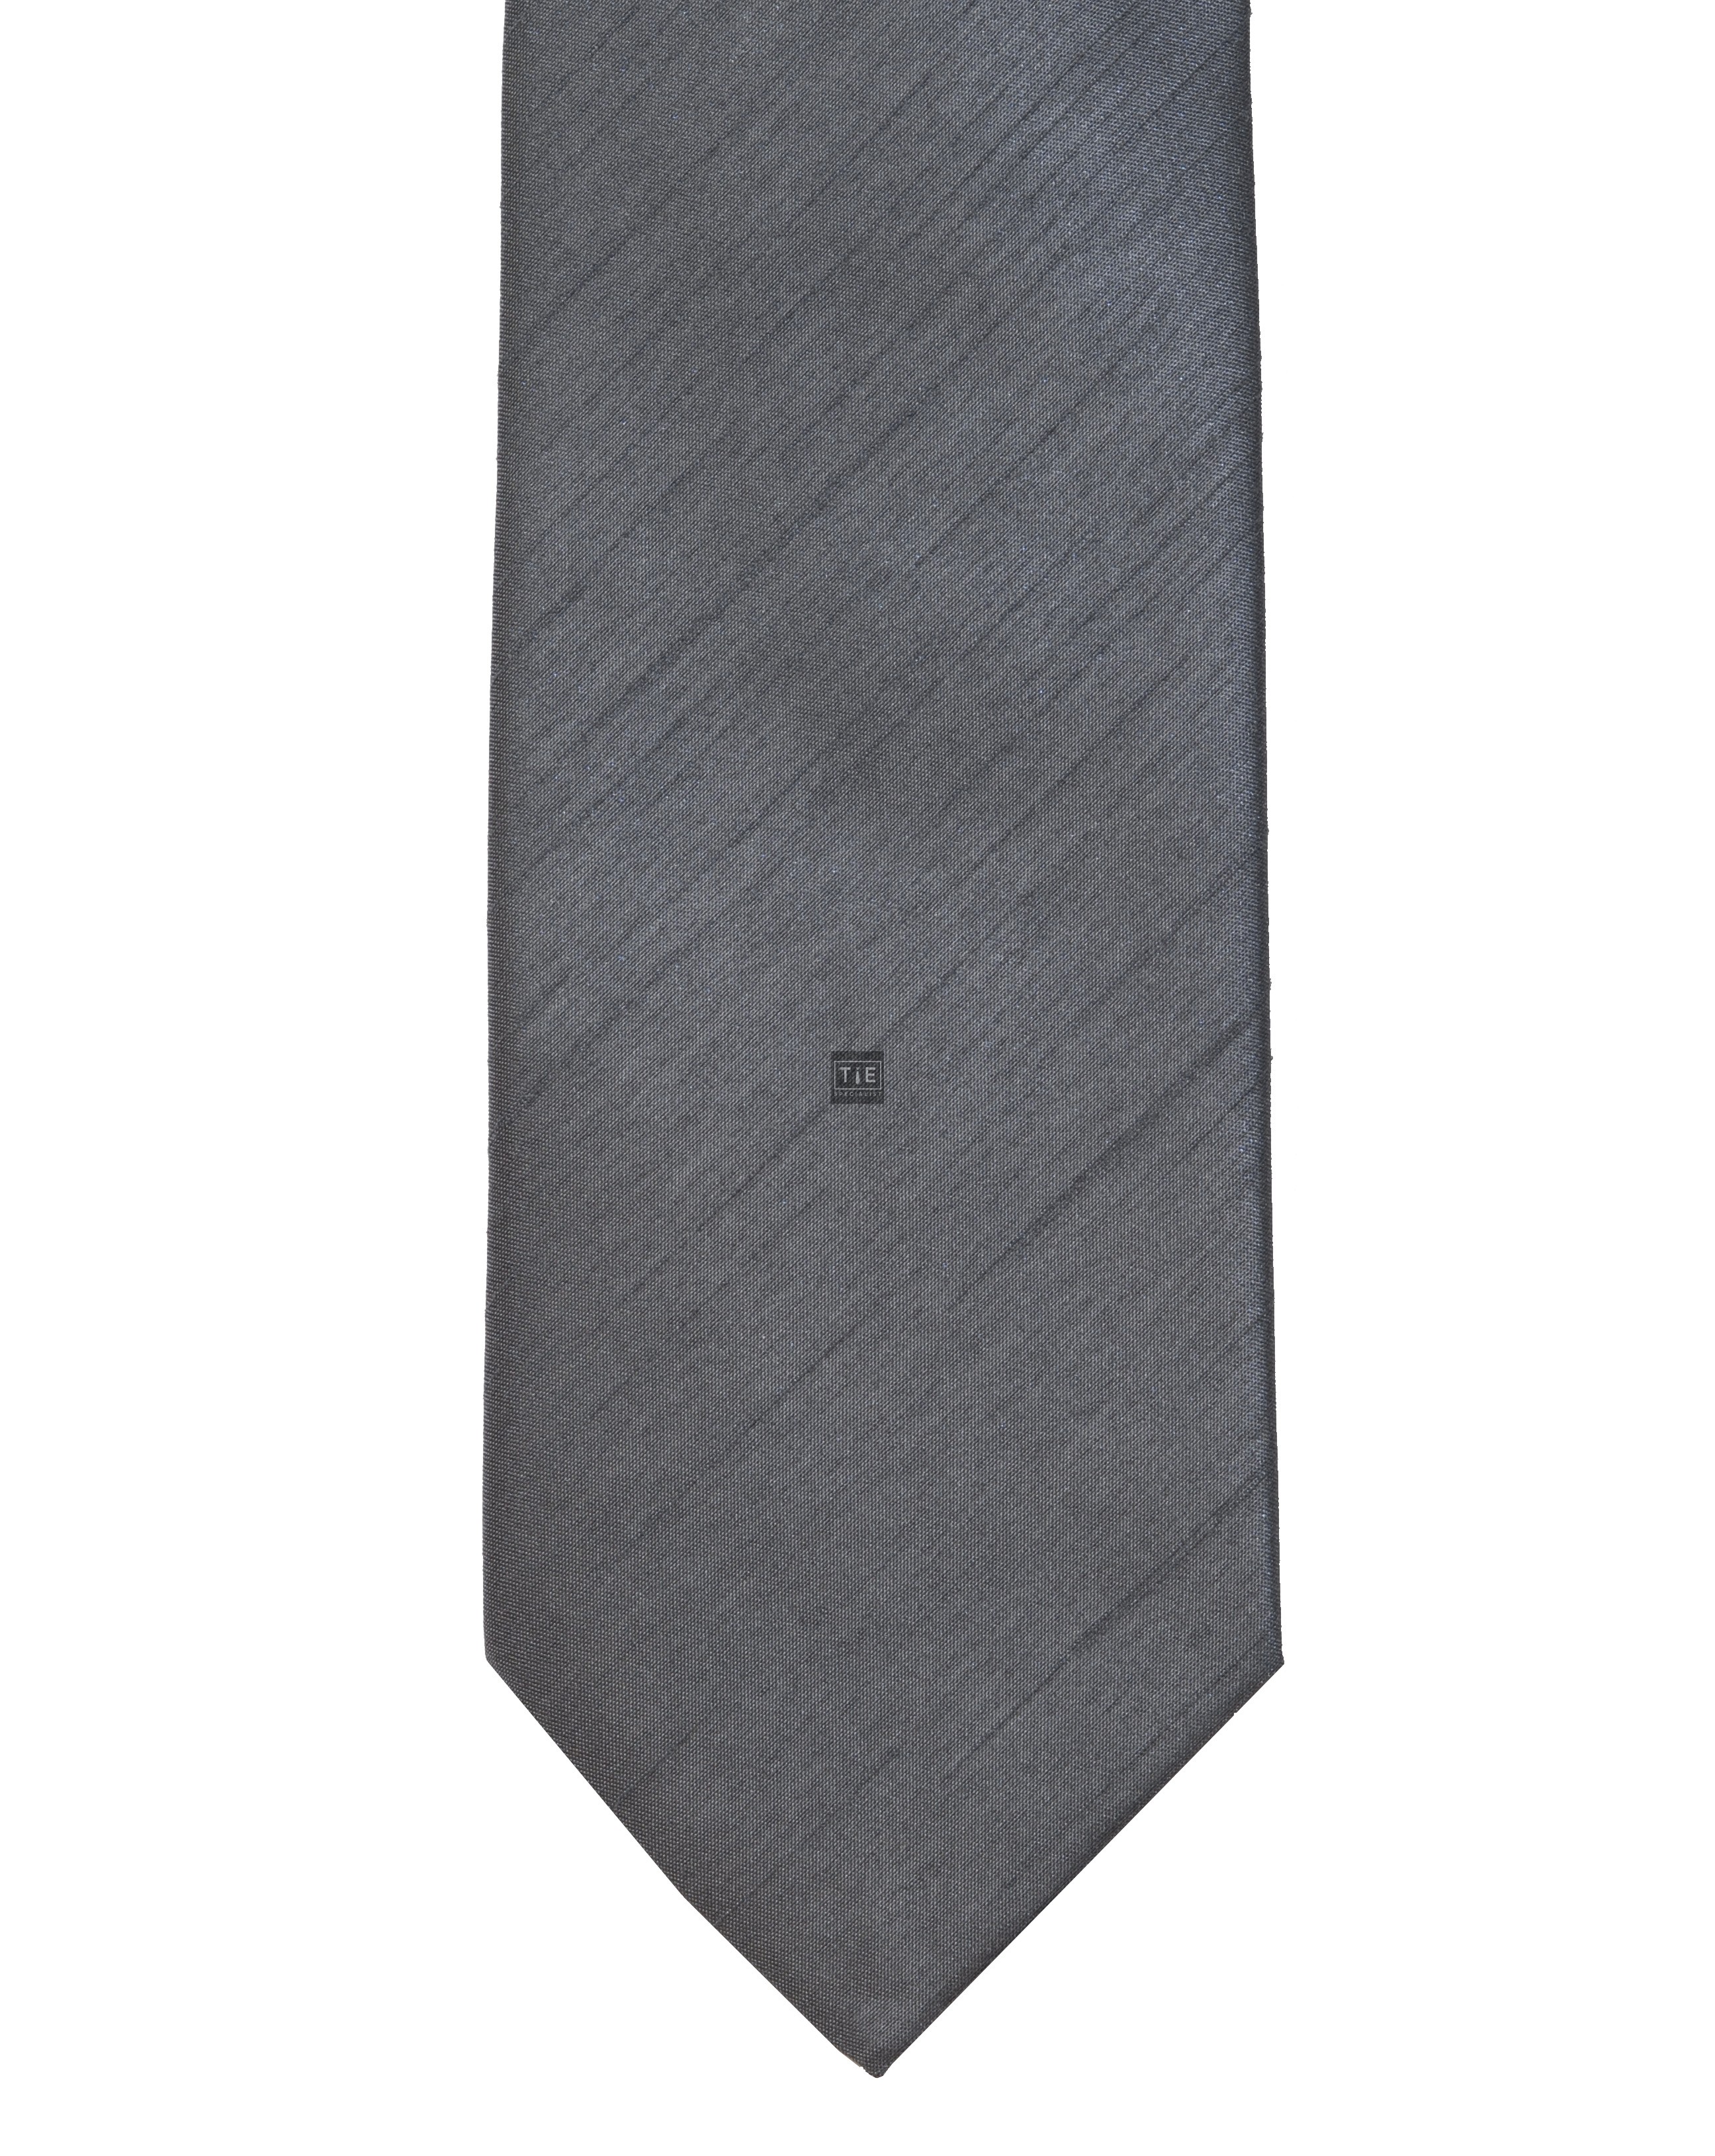 Grey Shantung Tie with Matching Pocket Hankie